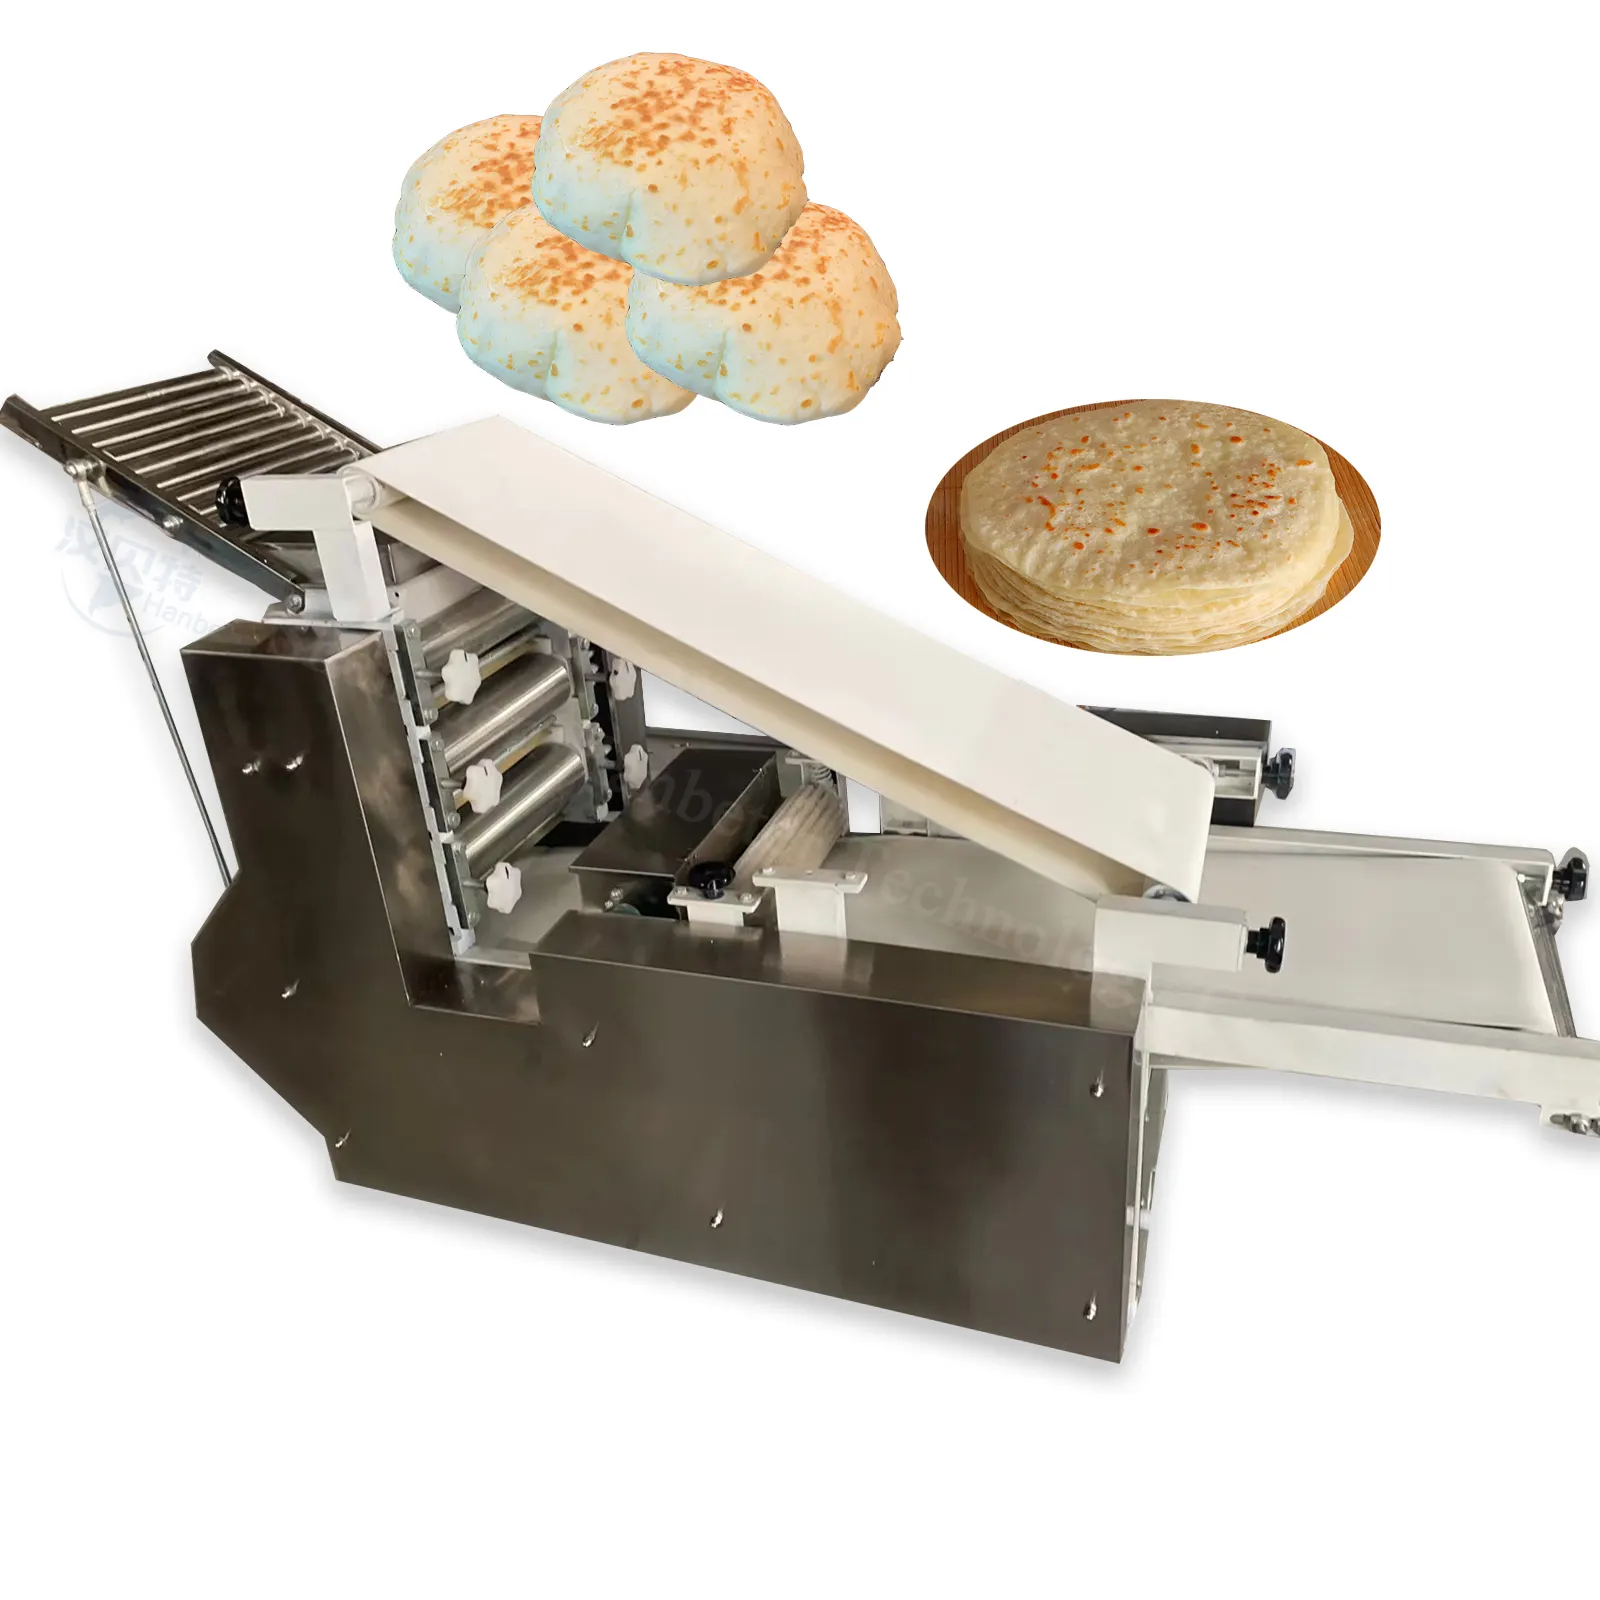 वाणिज्यिक मिल क्रेप केक बनाने वाली आटा शीटर पैनकेक मशीन पूरी तरह से स्वचालित मिनी औद्योगिक चपाती निर्माता